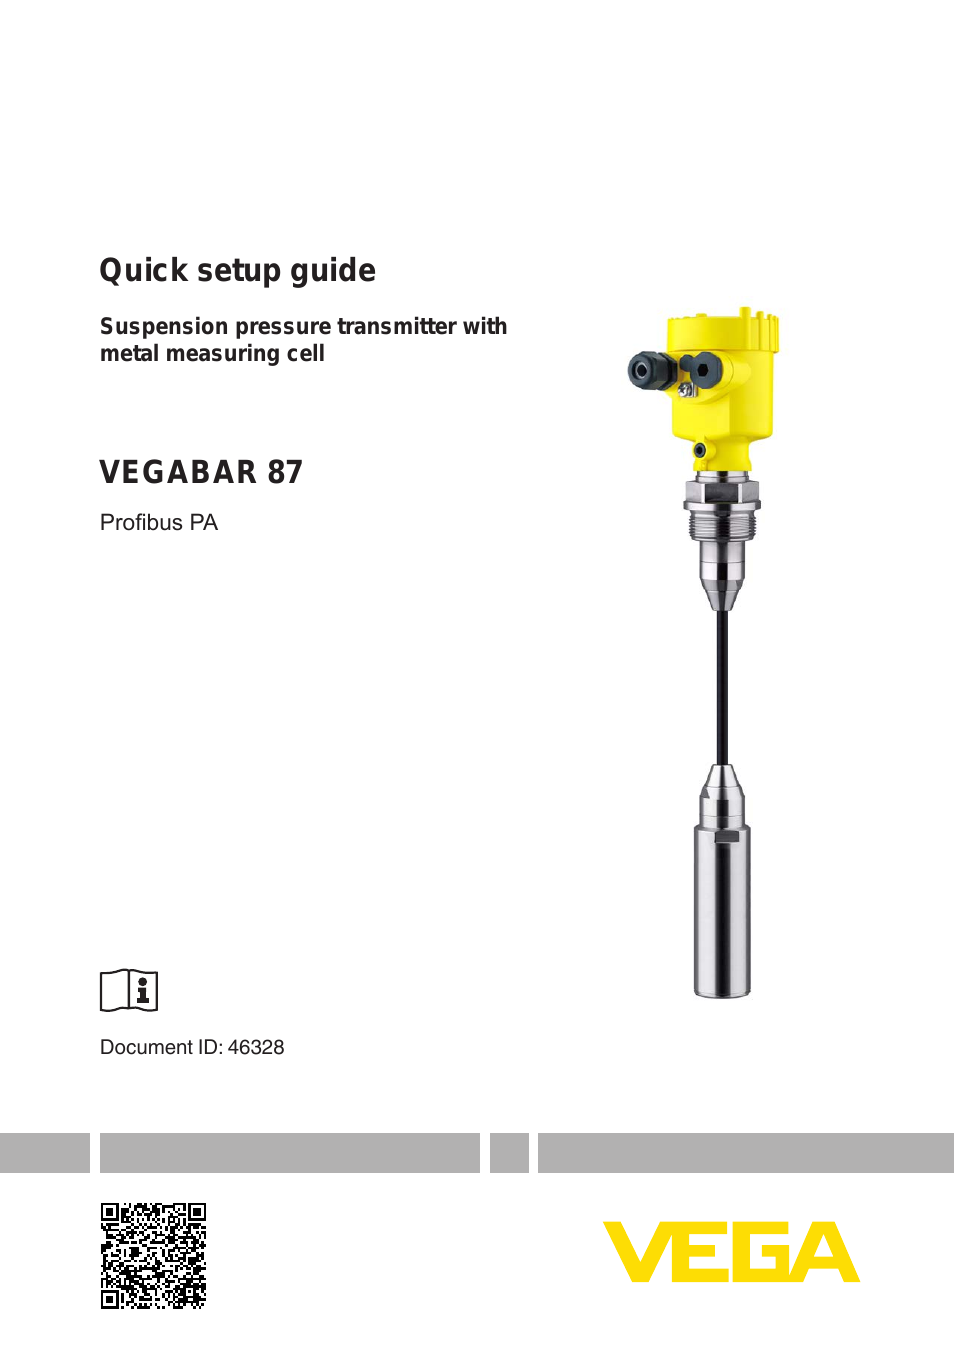 VEGABAR 87 Profibus PA - Quick setup guide